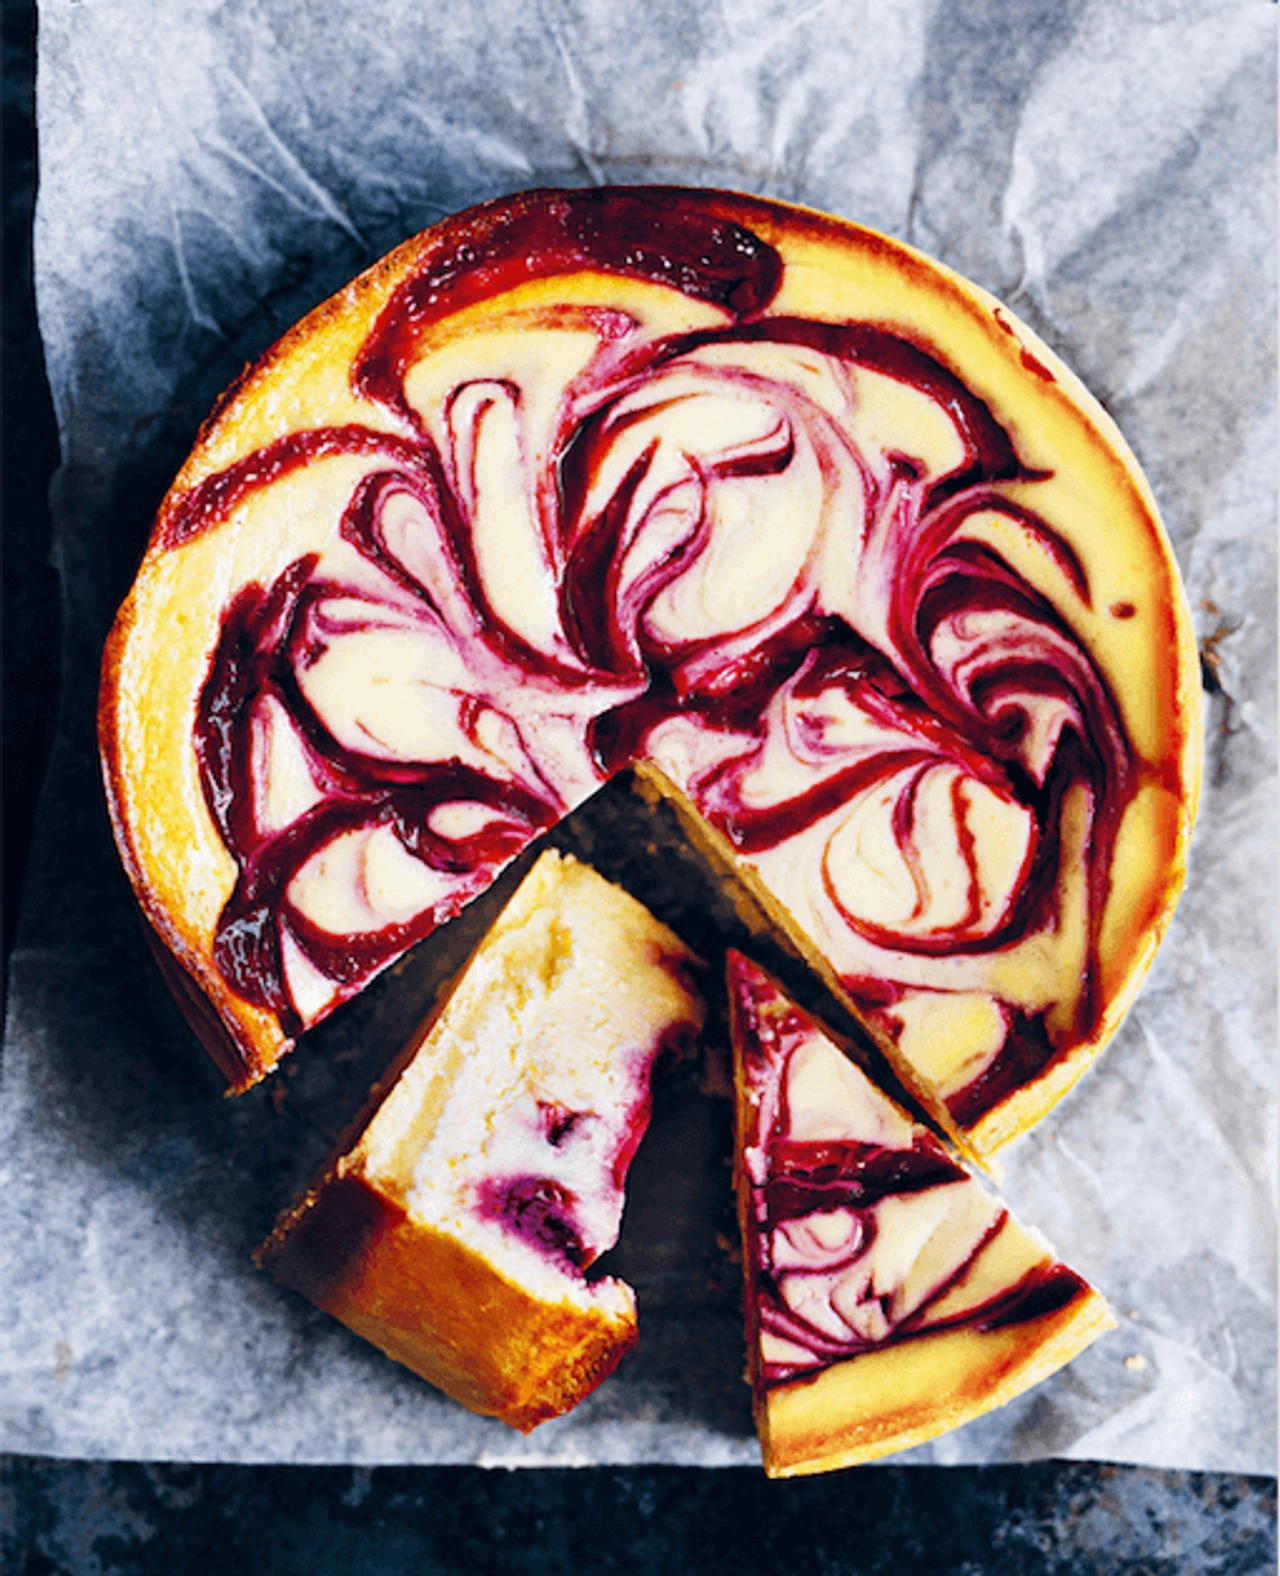 Basics to Brilliance: Ricotta cheesecake uit de oven